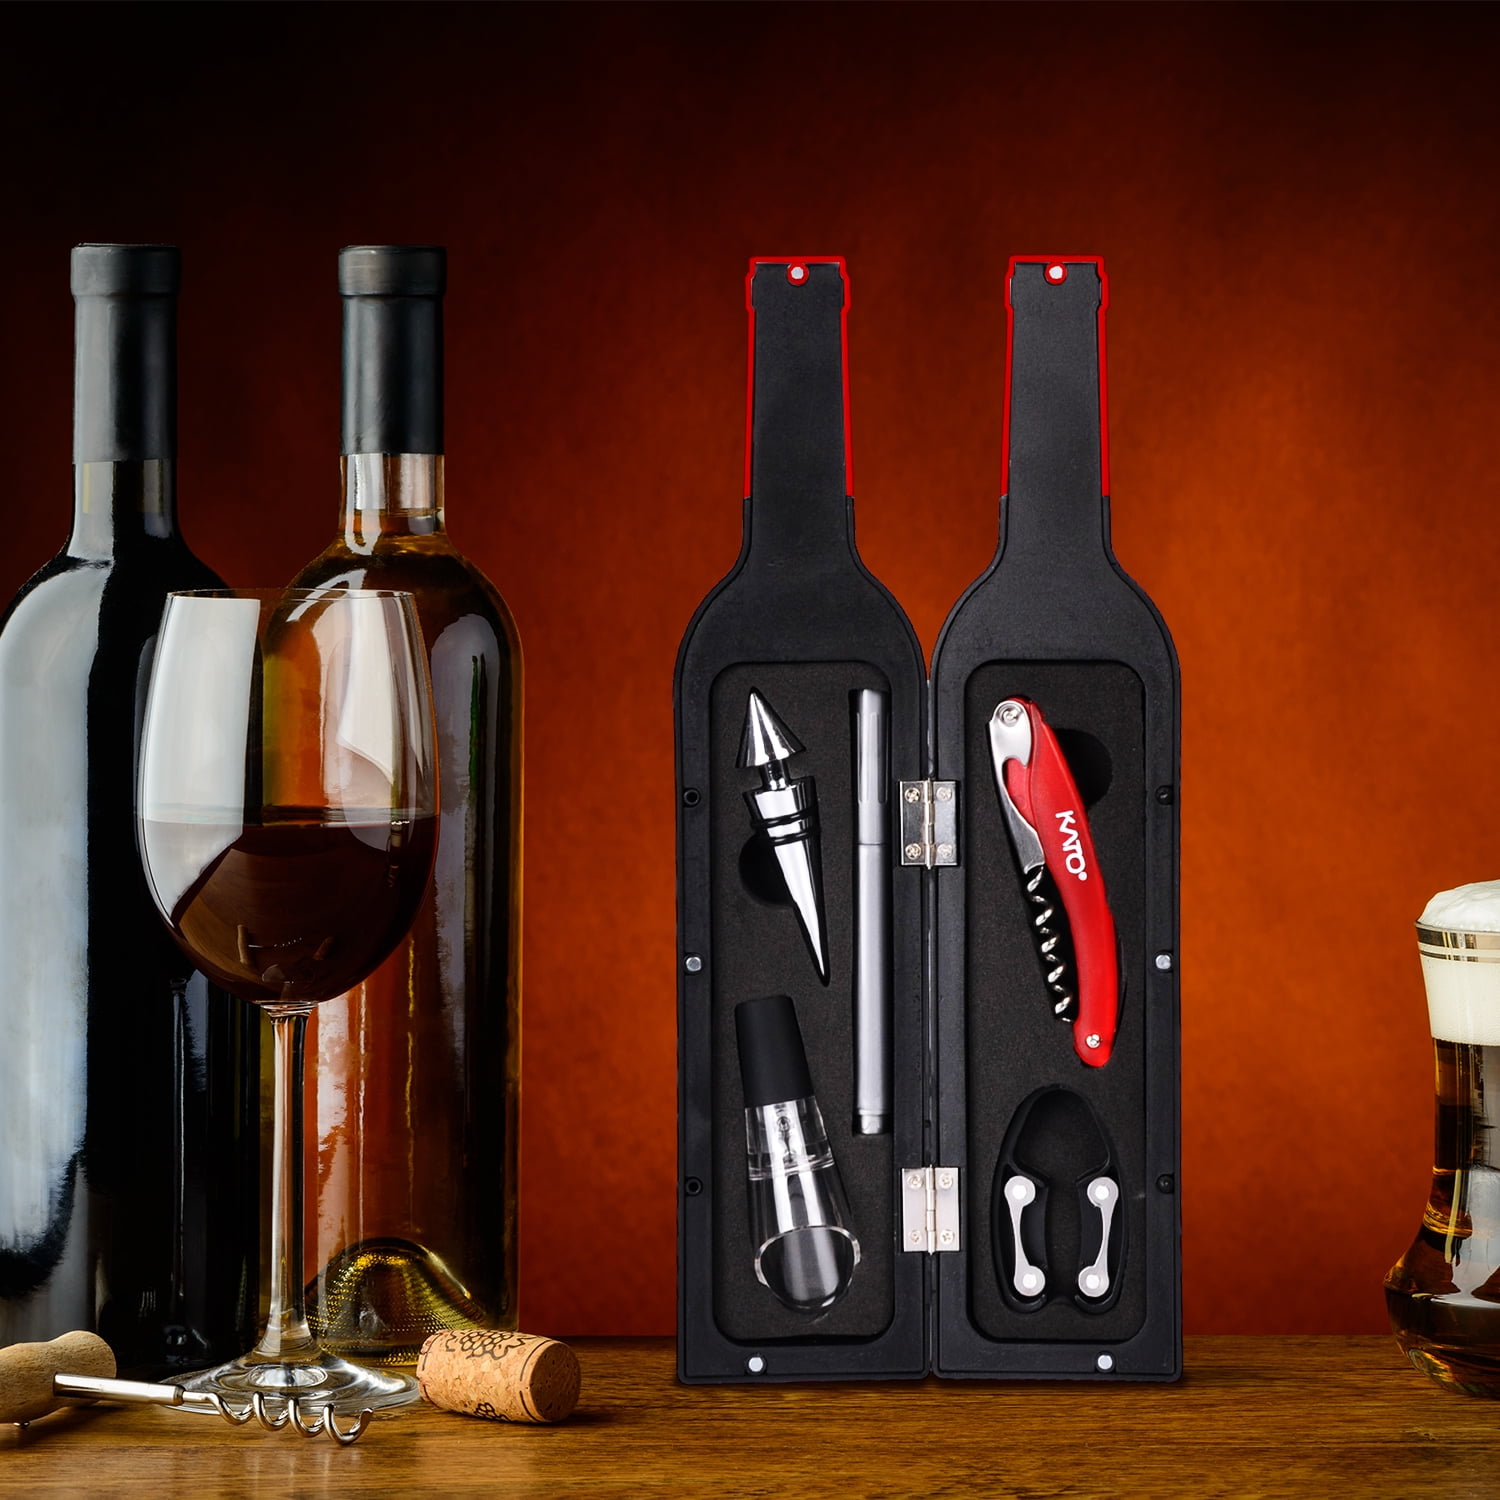 Robert Mondavi Wine, Corkscrew & Bottle Stopper Gift Set - Three